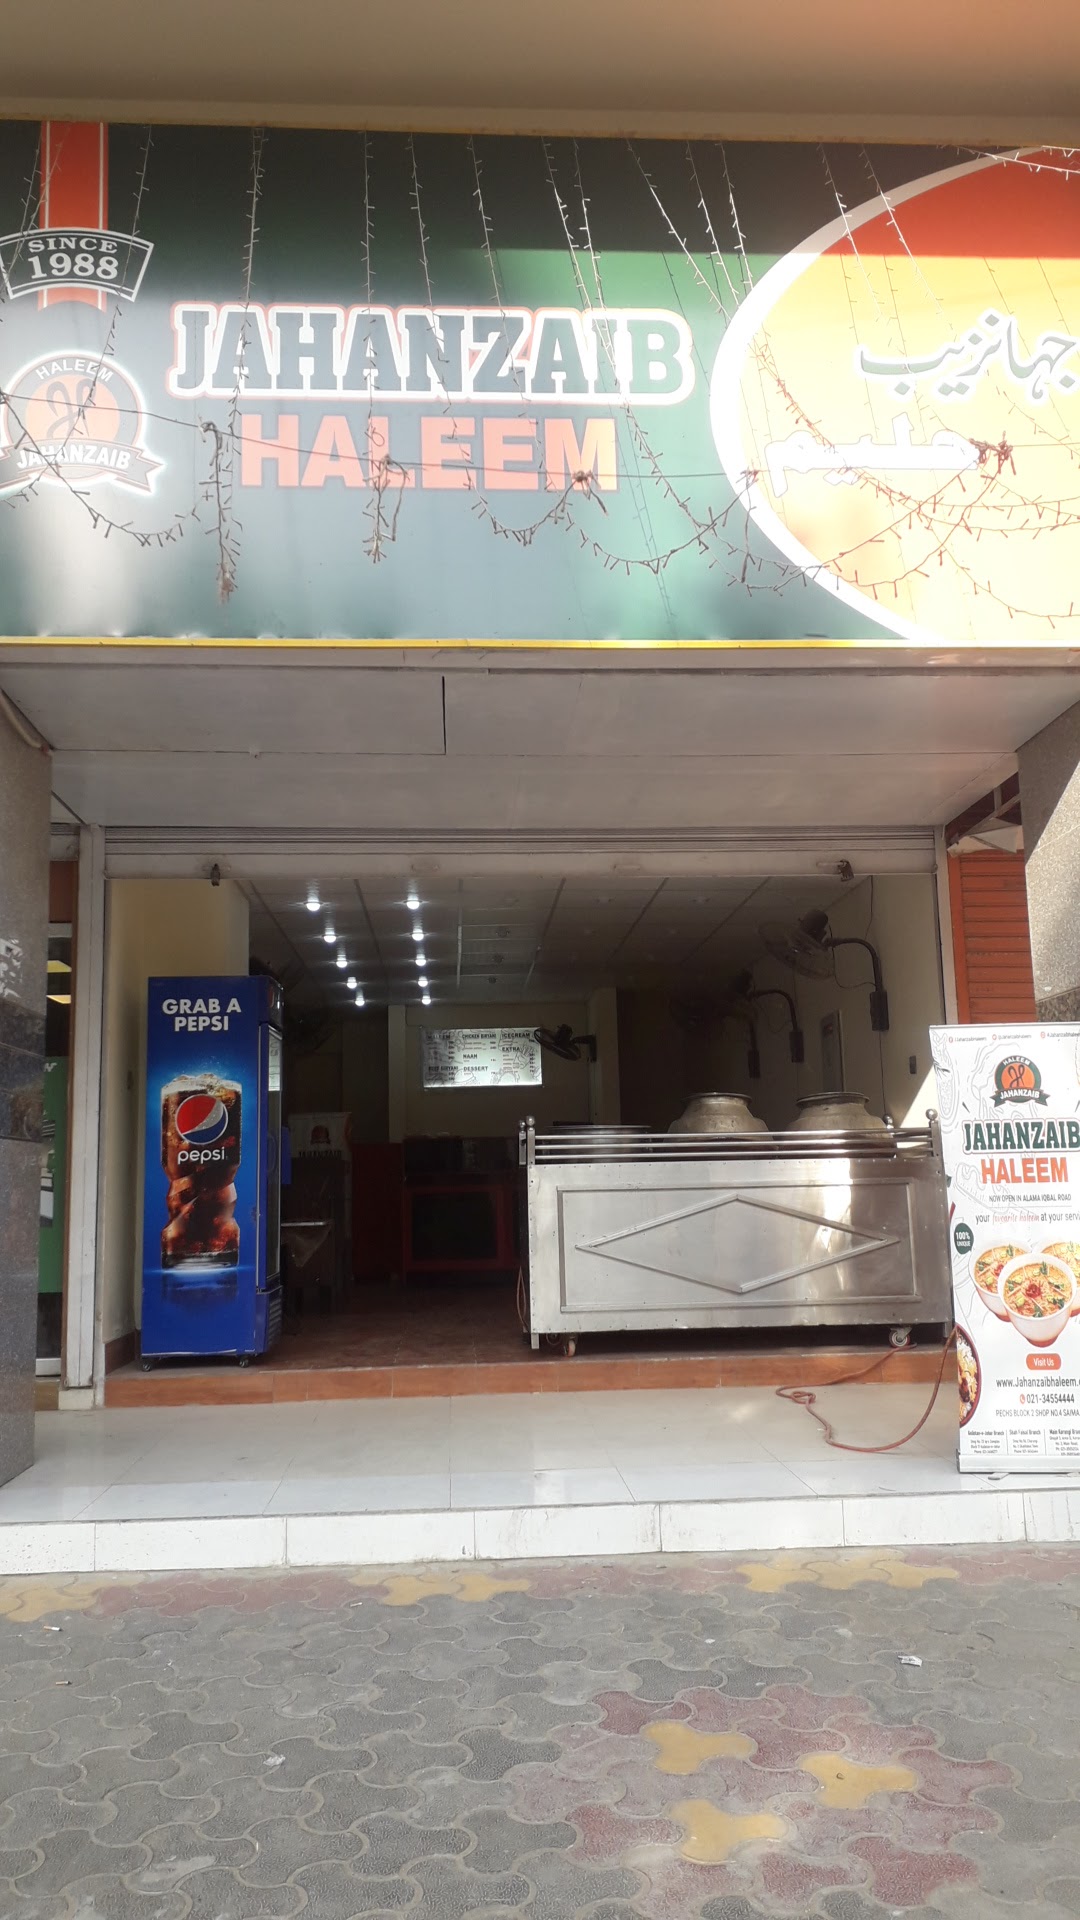 Jahanzaib Haleem - Pechs